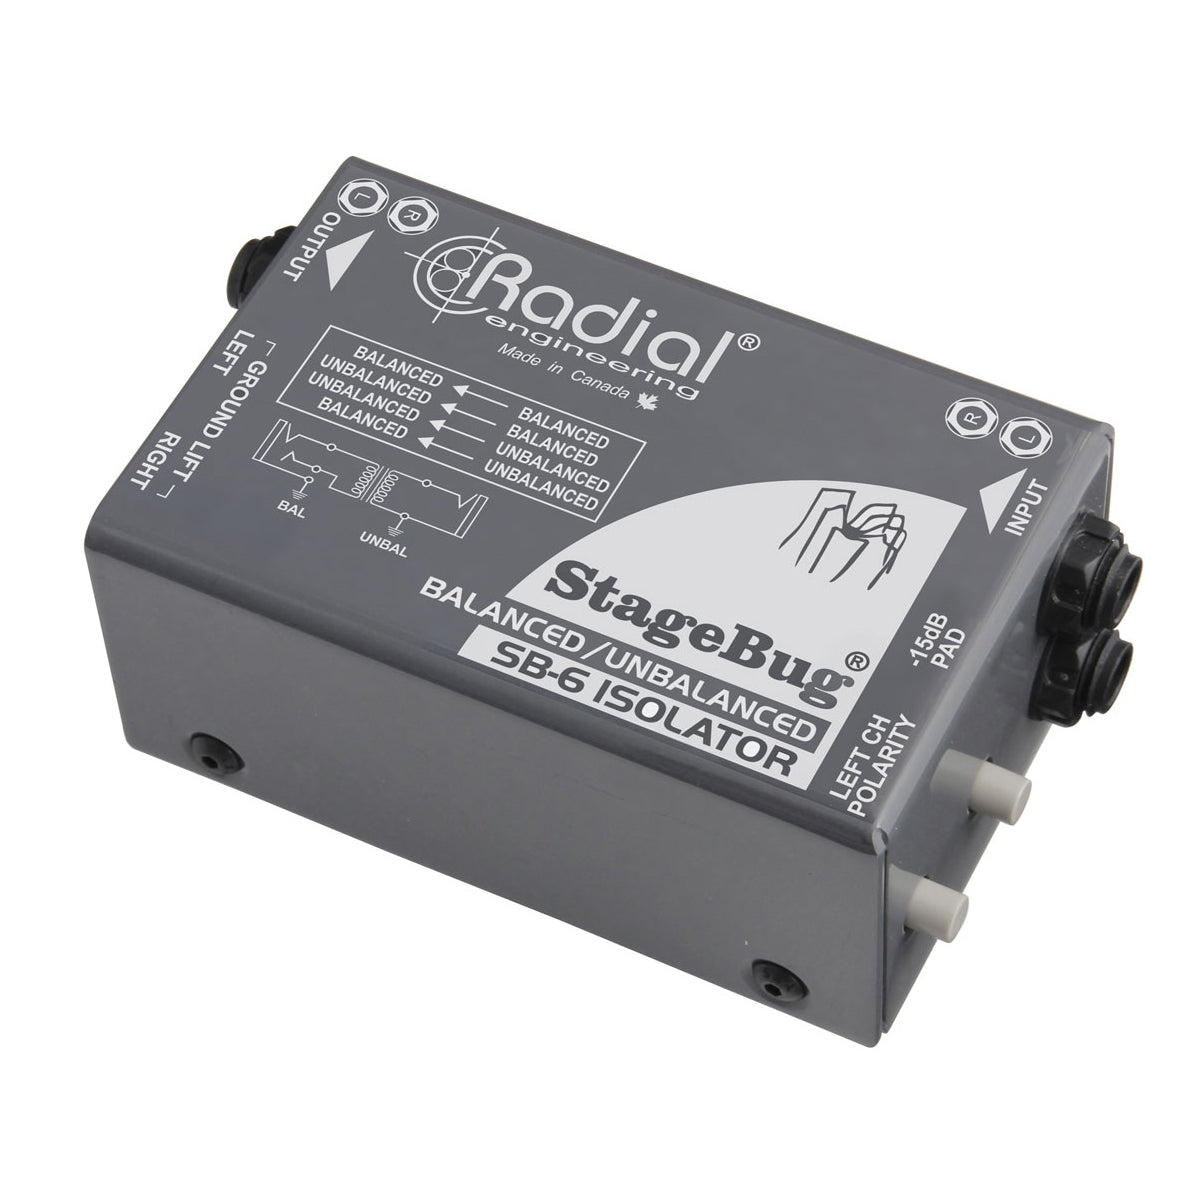 Radial StageBug SB-6 Isolator Isolator for balanced and unbalanced signals